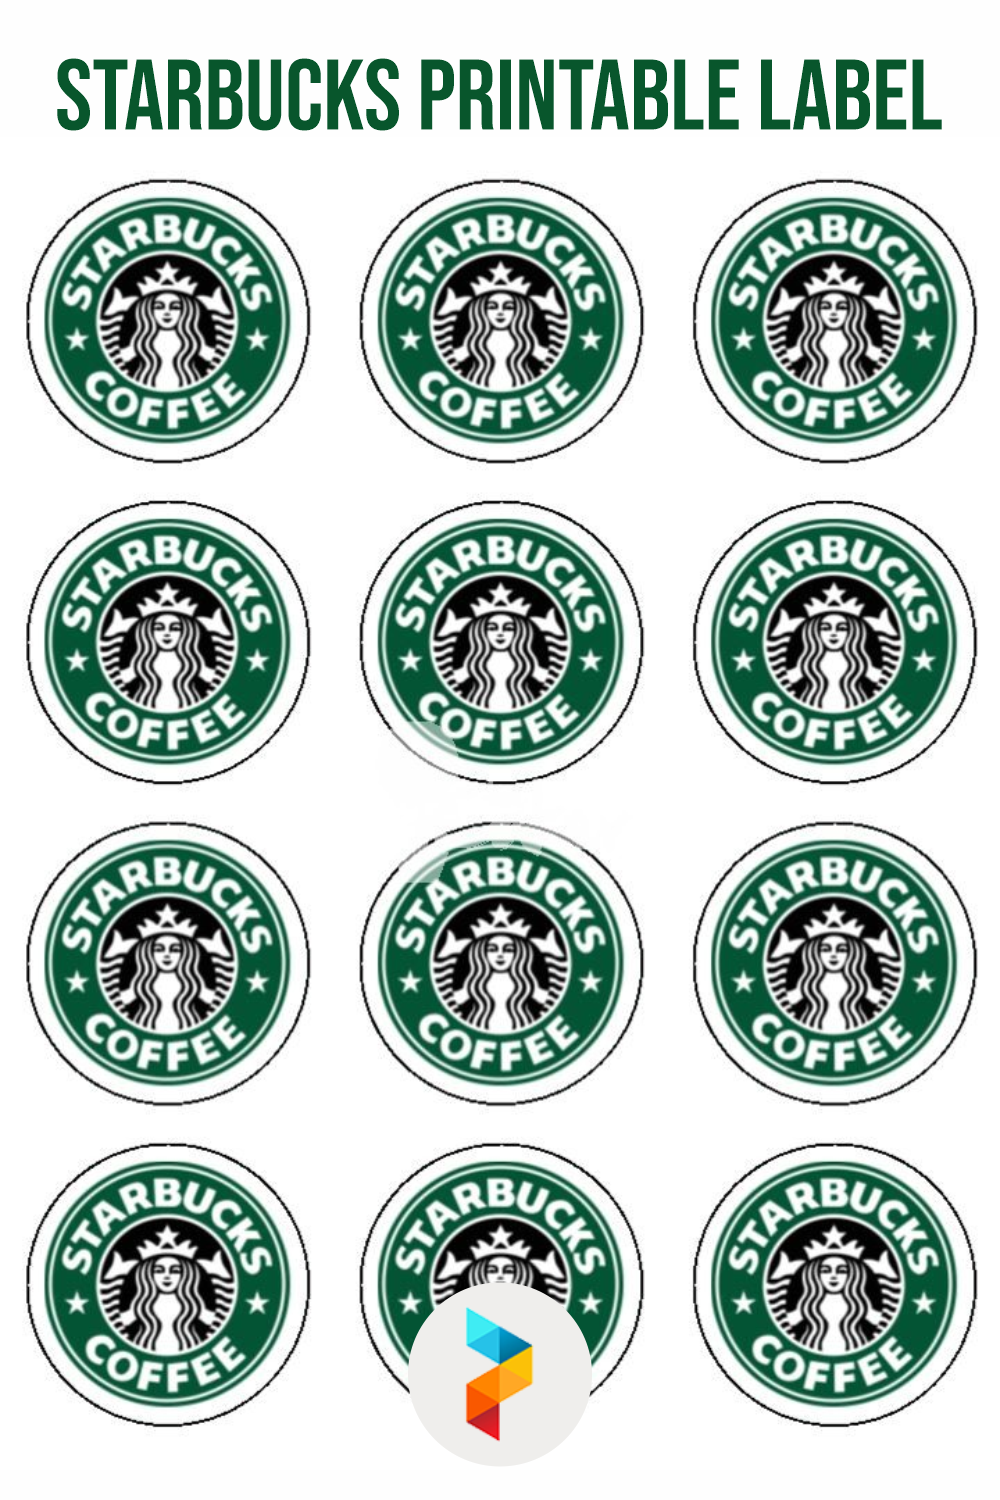 Starbucks Printable Label